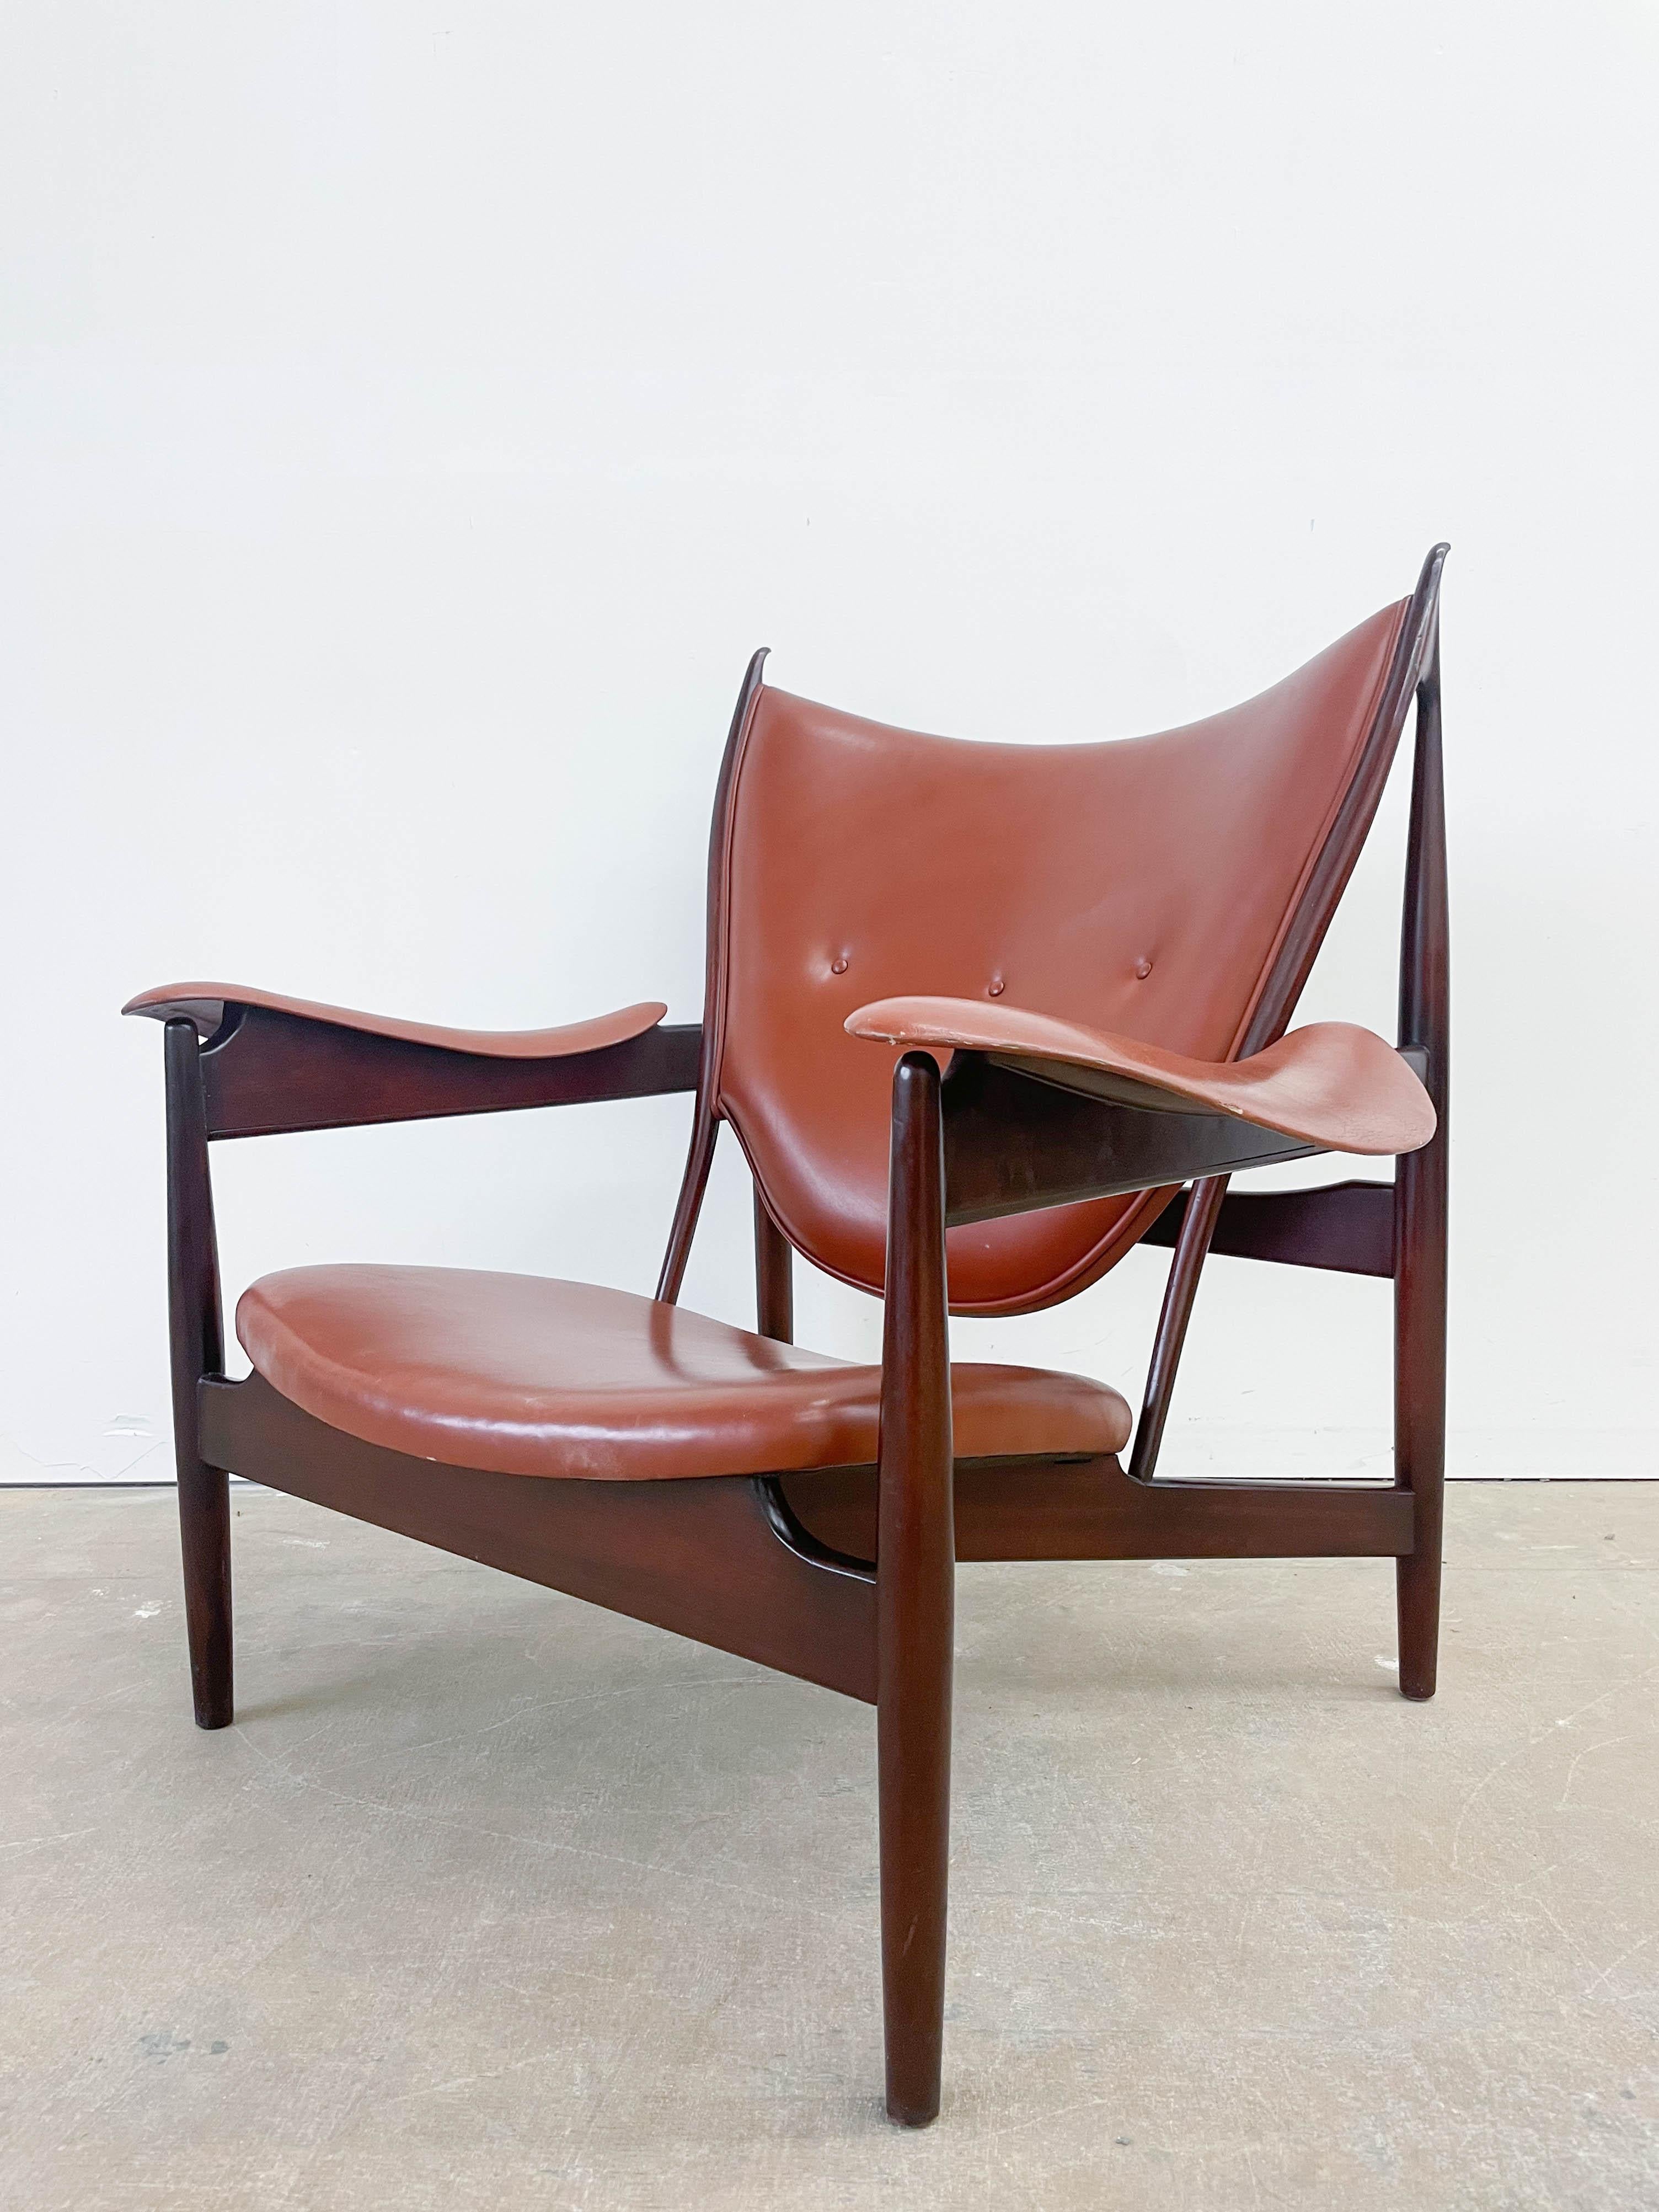 Finn Juhl Chieftain Chair by Interior Crafts 1